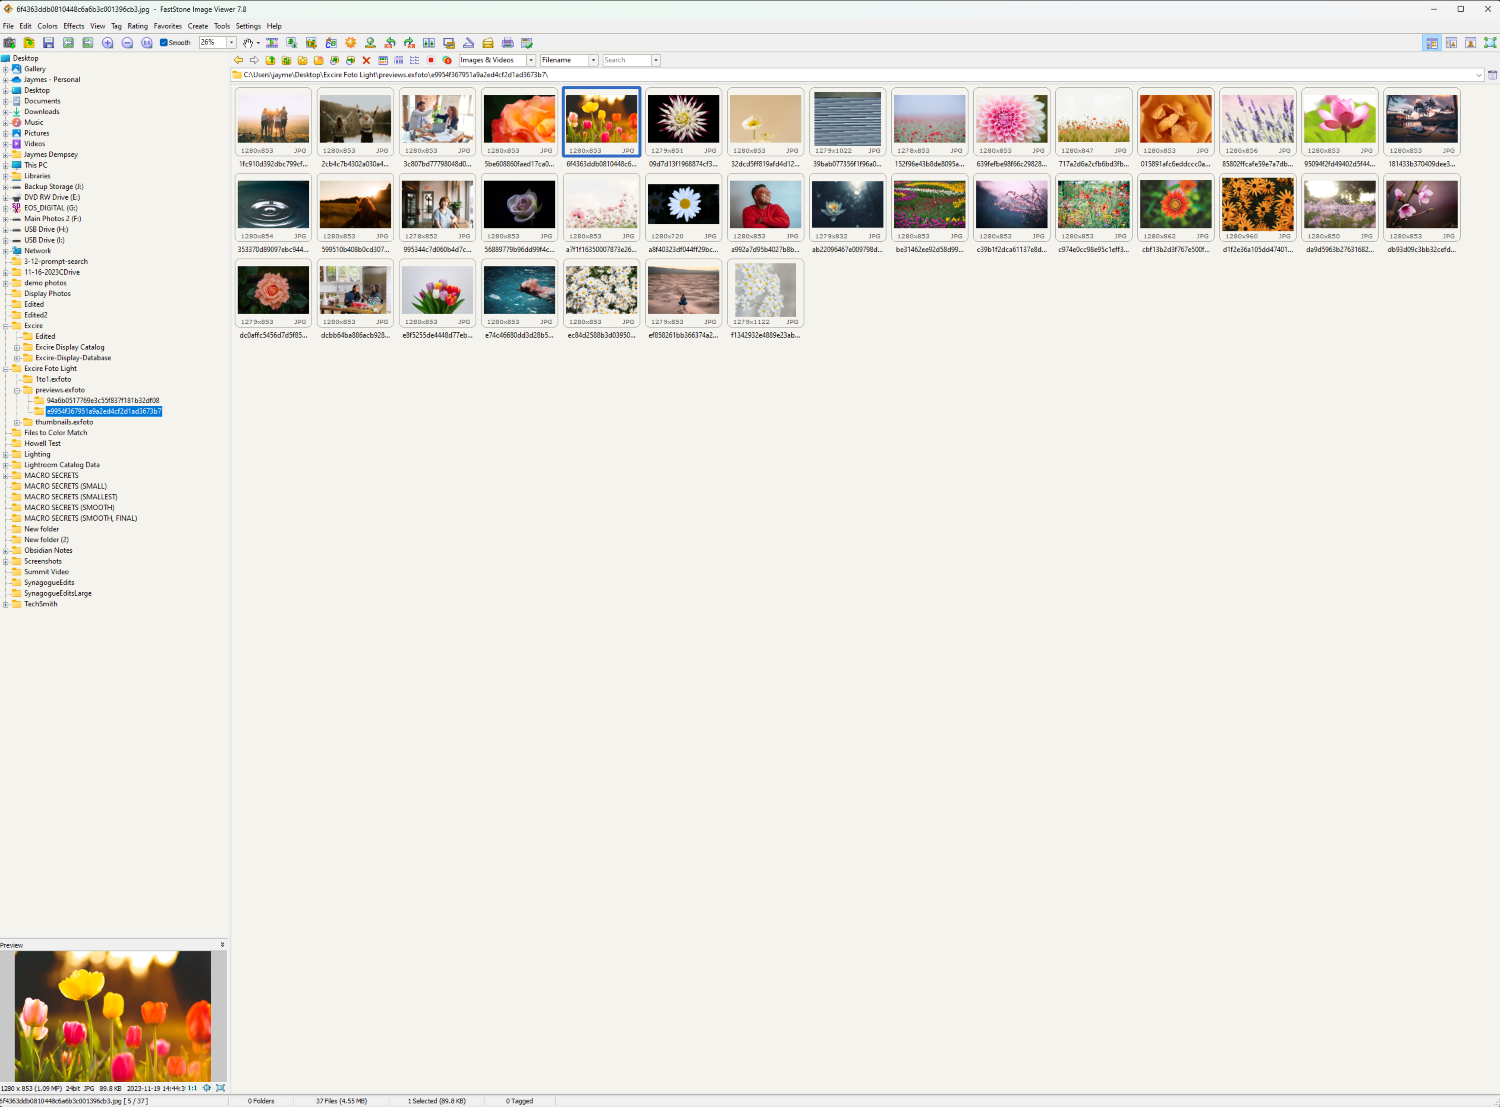 FastStone Image Viewer main layout